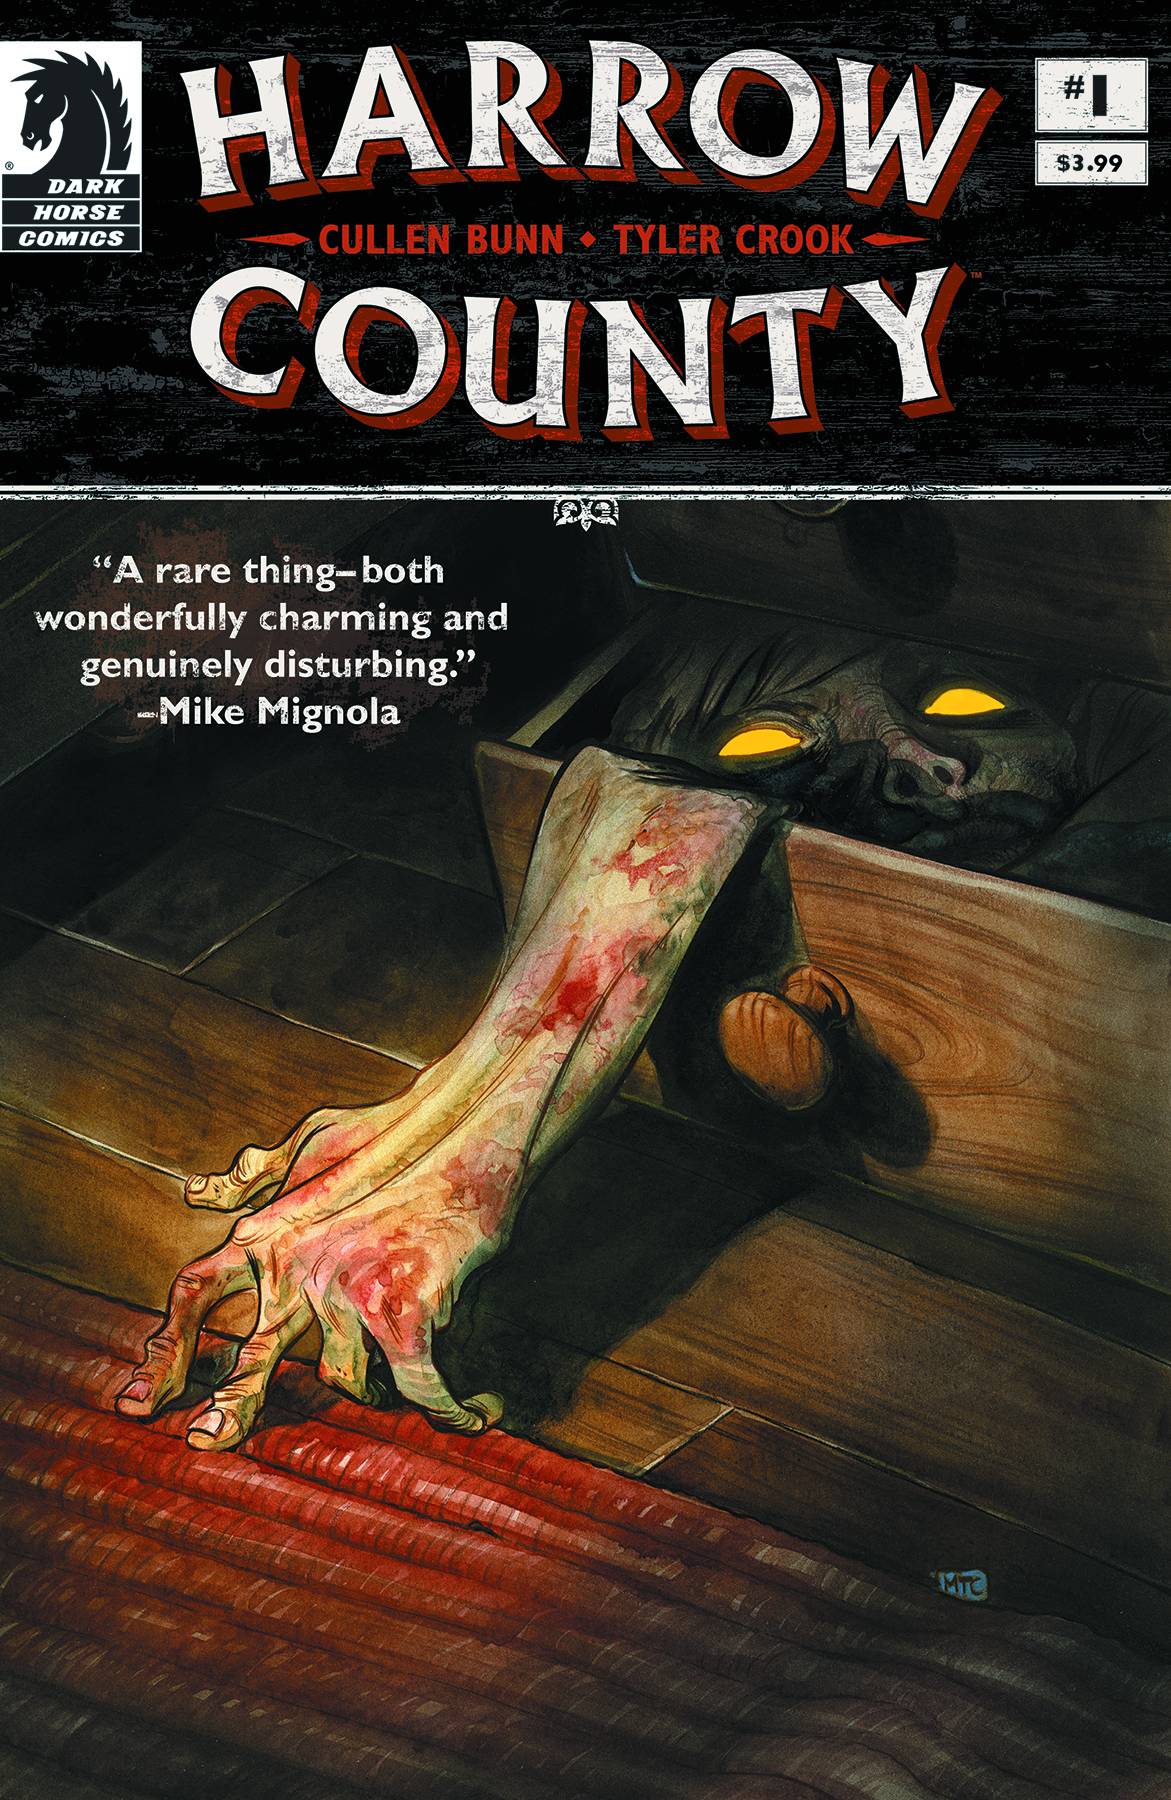 Harrow County by Cullen Bunn and Tyler Cook